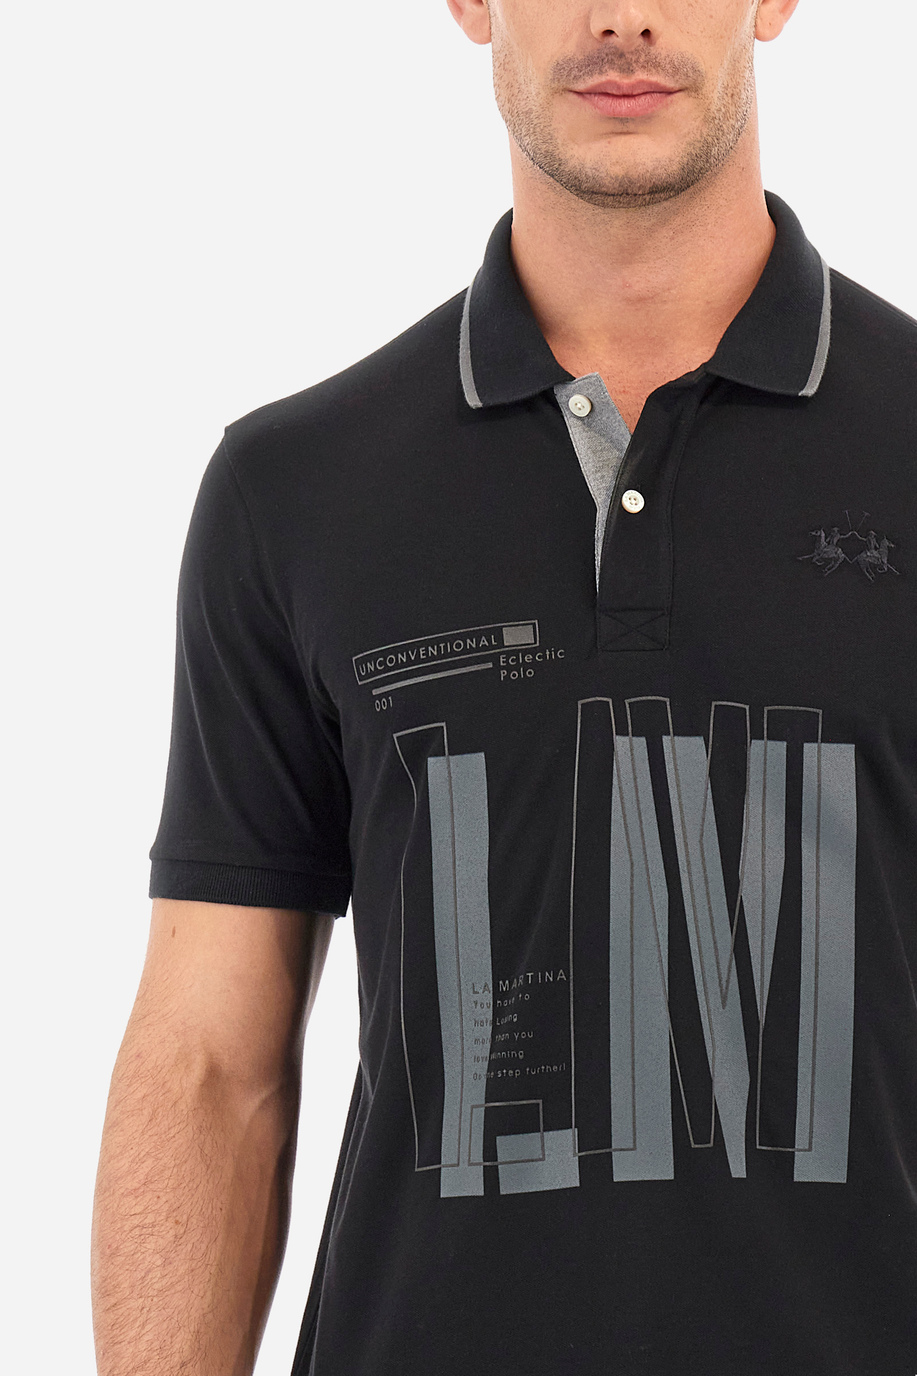 Men's polo shirt in a regular fit - Willett - Short Sleeve | La Martina - Official Online Shop